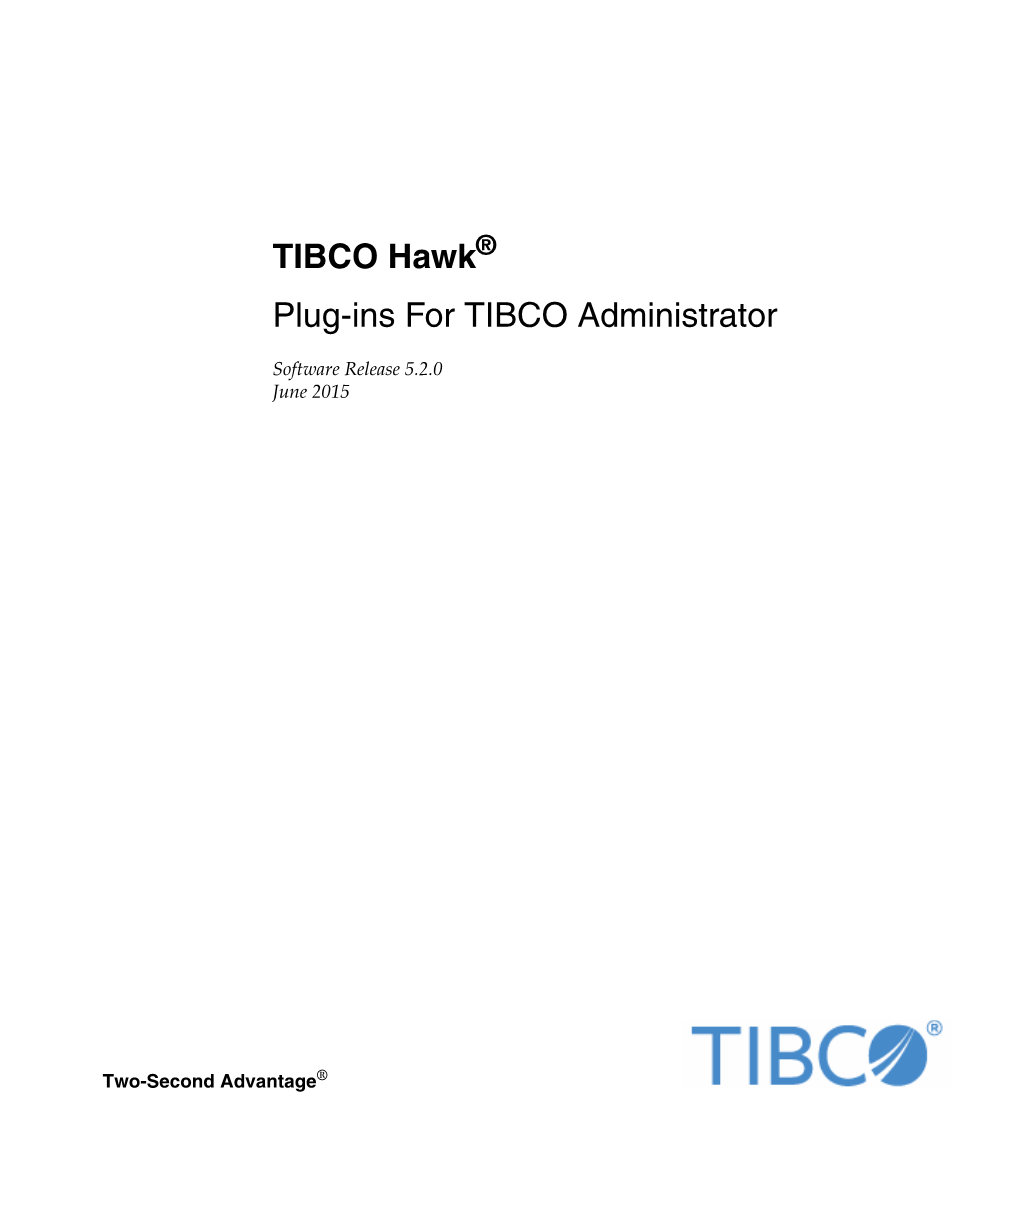 TIBCO Hawk Plug-Ins for TIBCO Administrator Contains Detailed Descriptions of the TIBCO Hawk Plug-Ins Accessed Via TIBCO Administrator